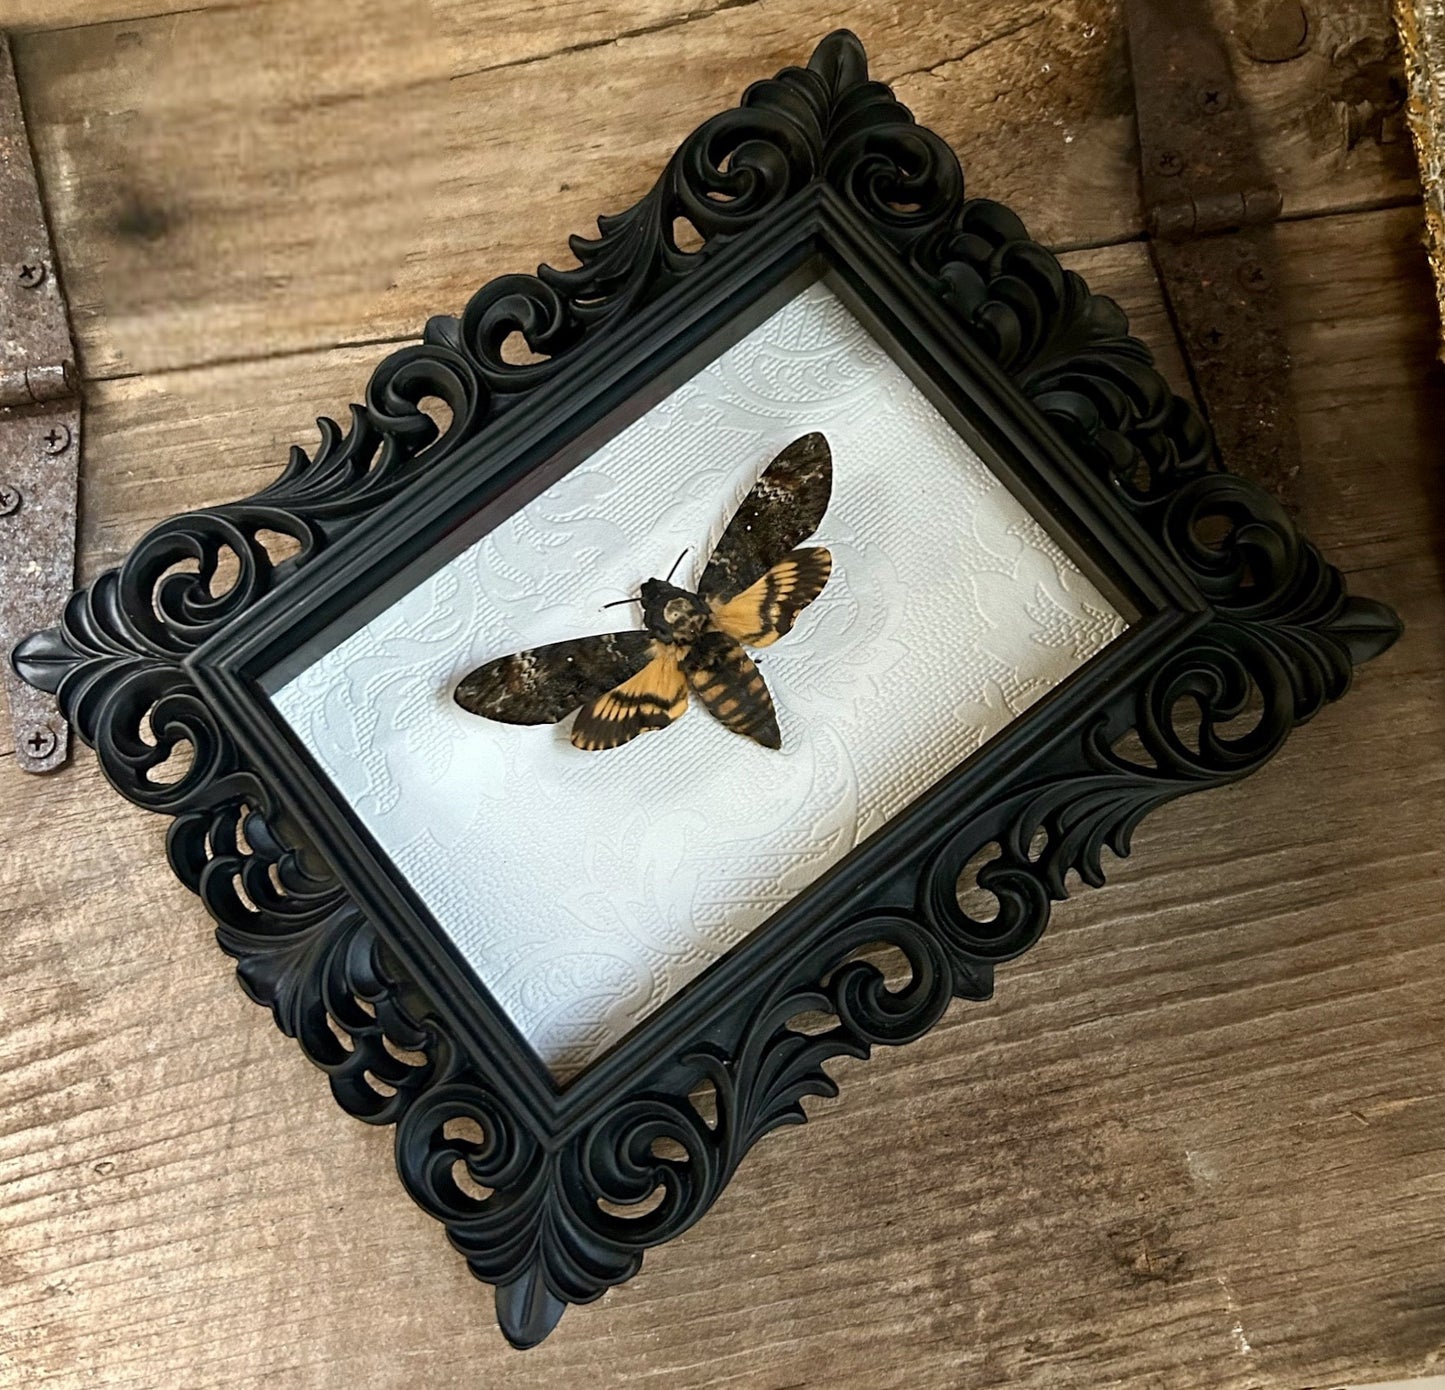 Death's Head Moth Frame